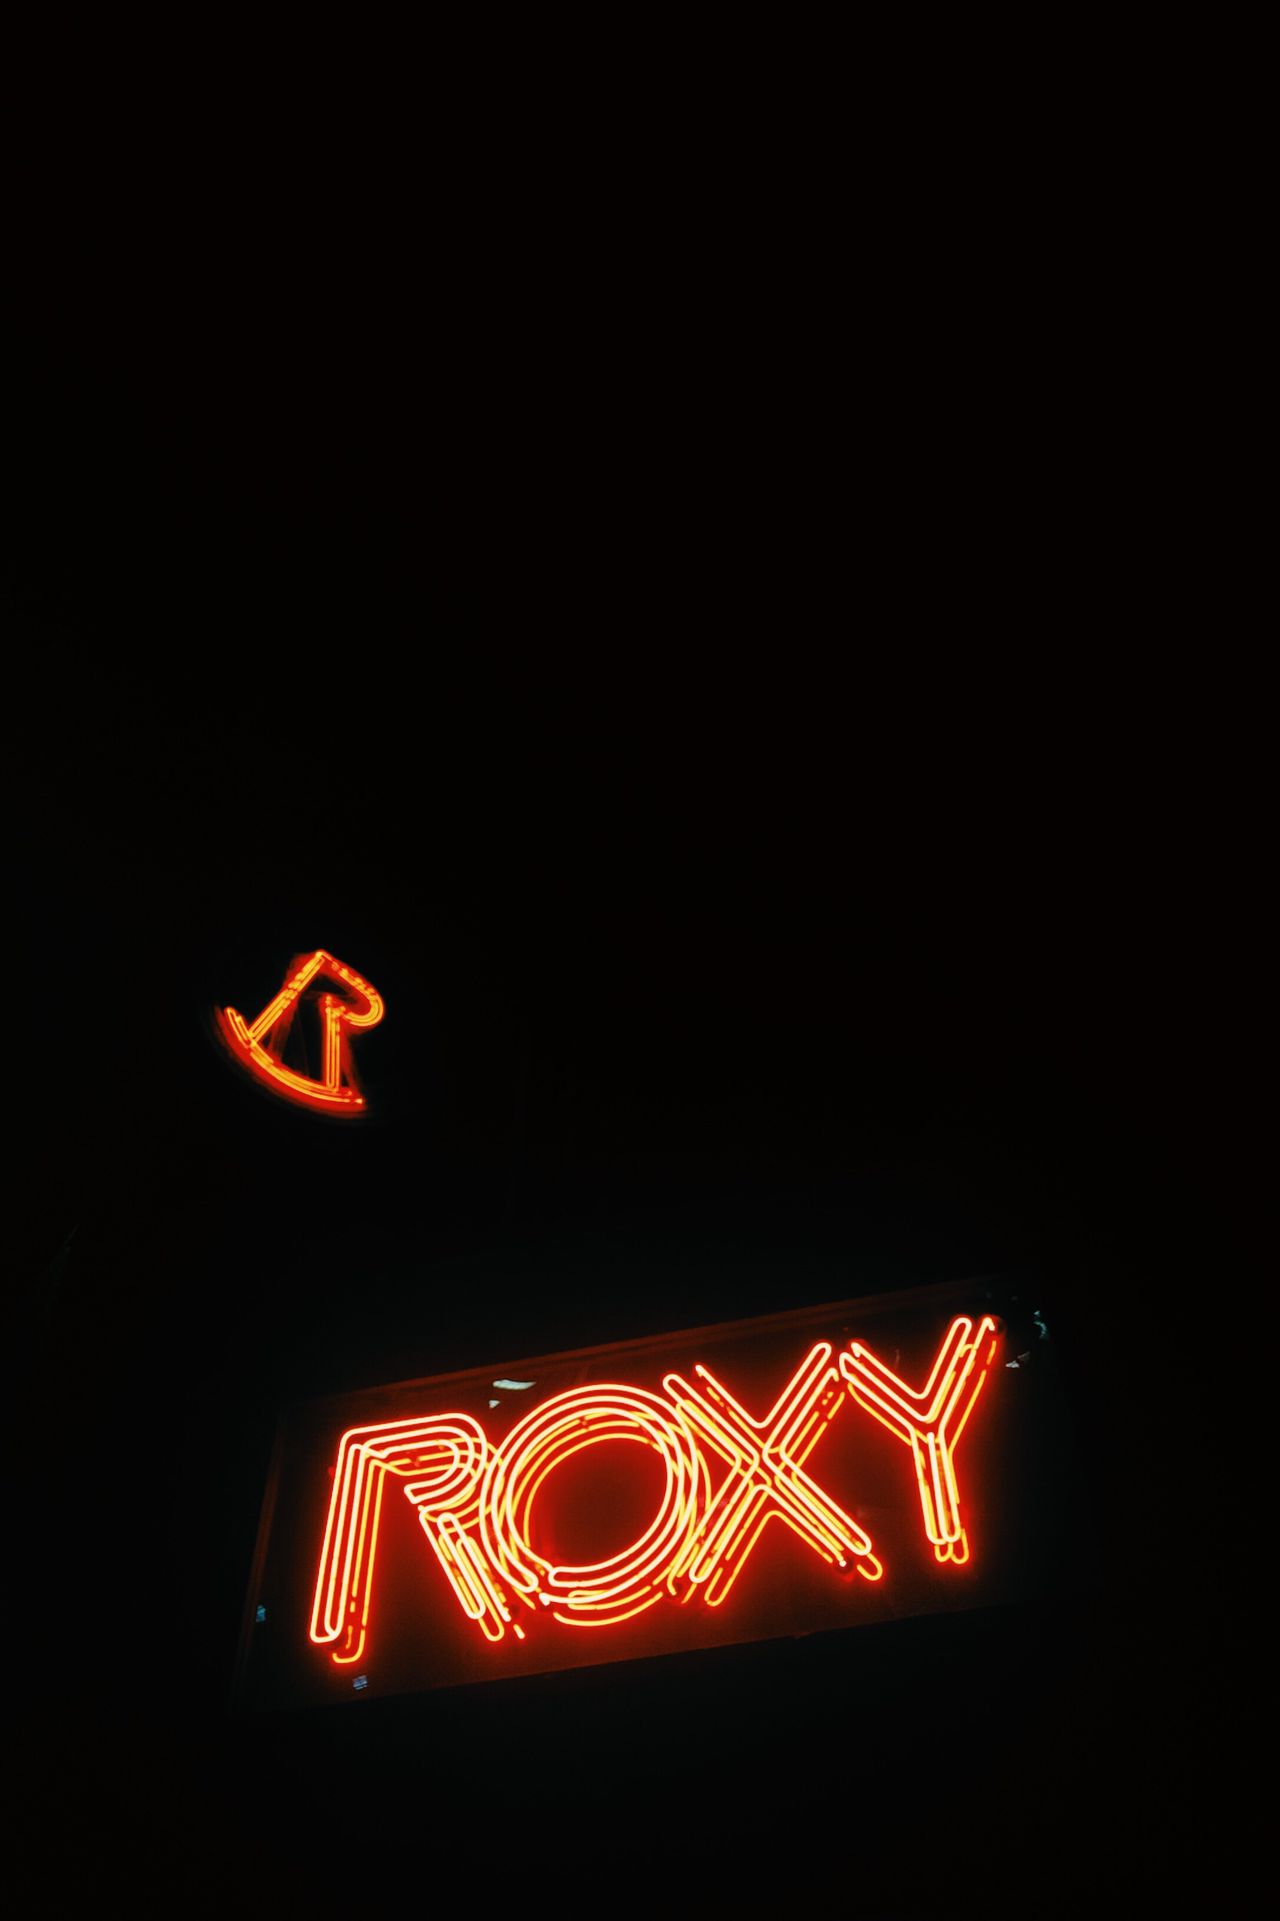 Roxytheater